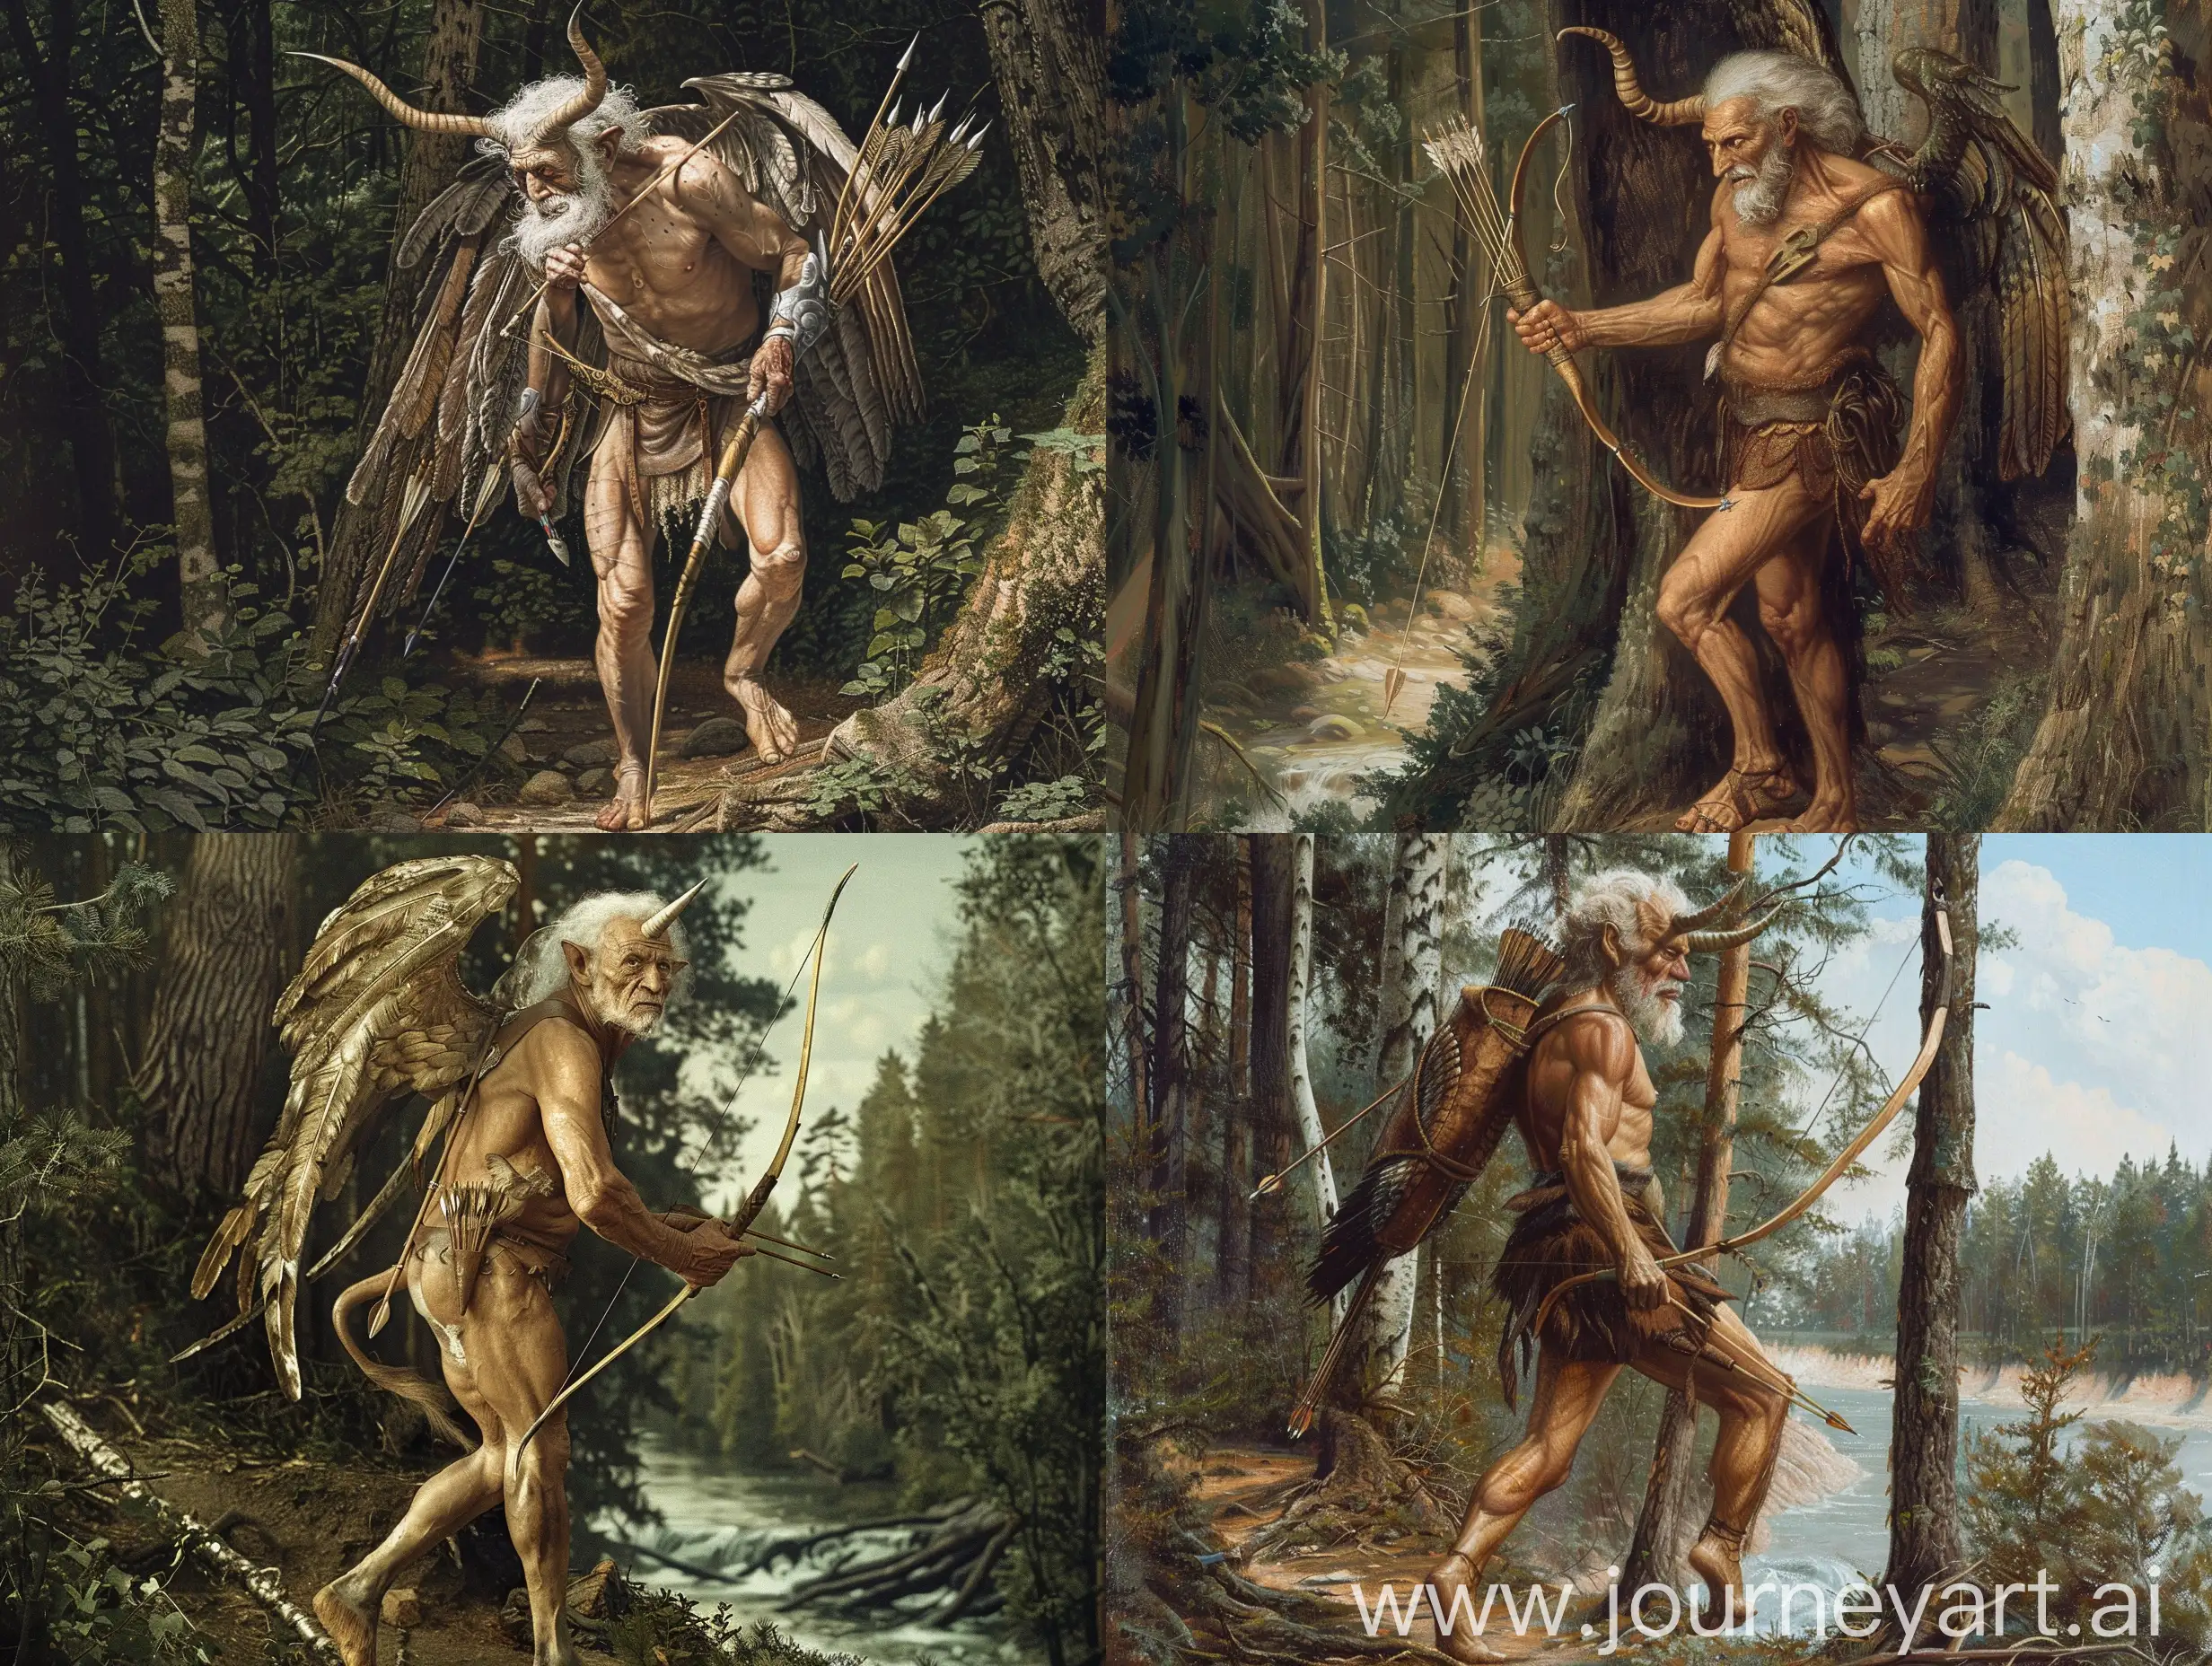 Photorealistic-Wise-Elderly-Centaur-Chiron-Emerges-from-Forest-Edge